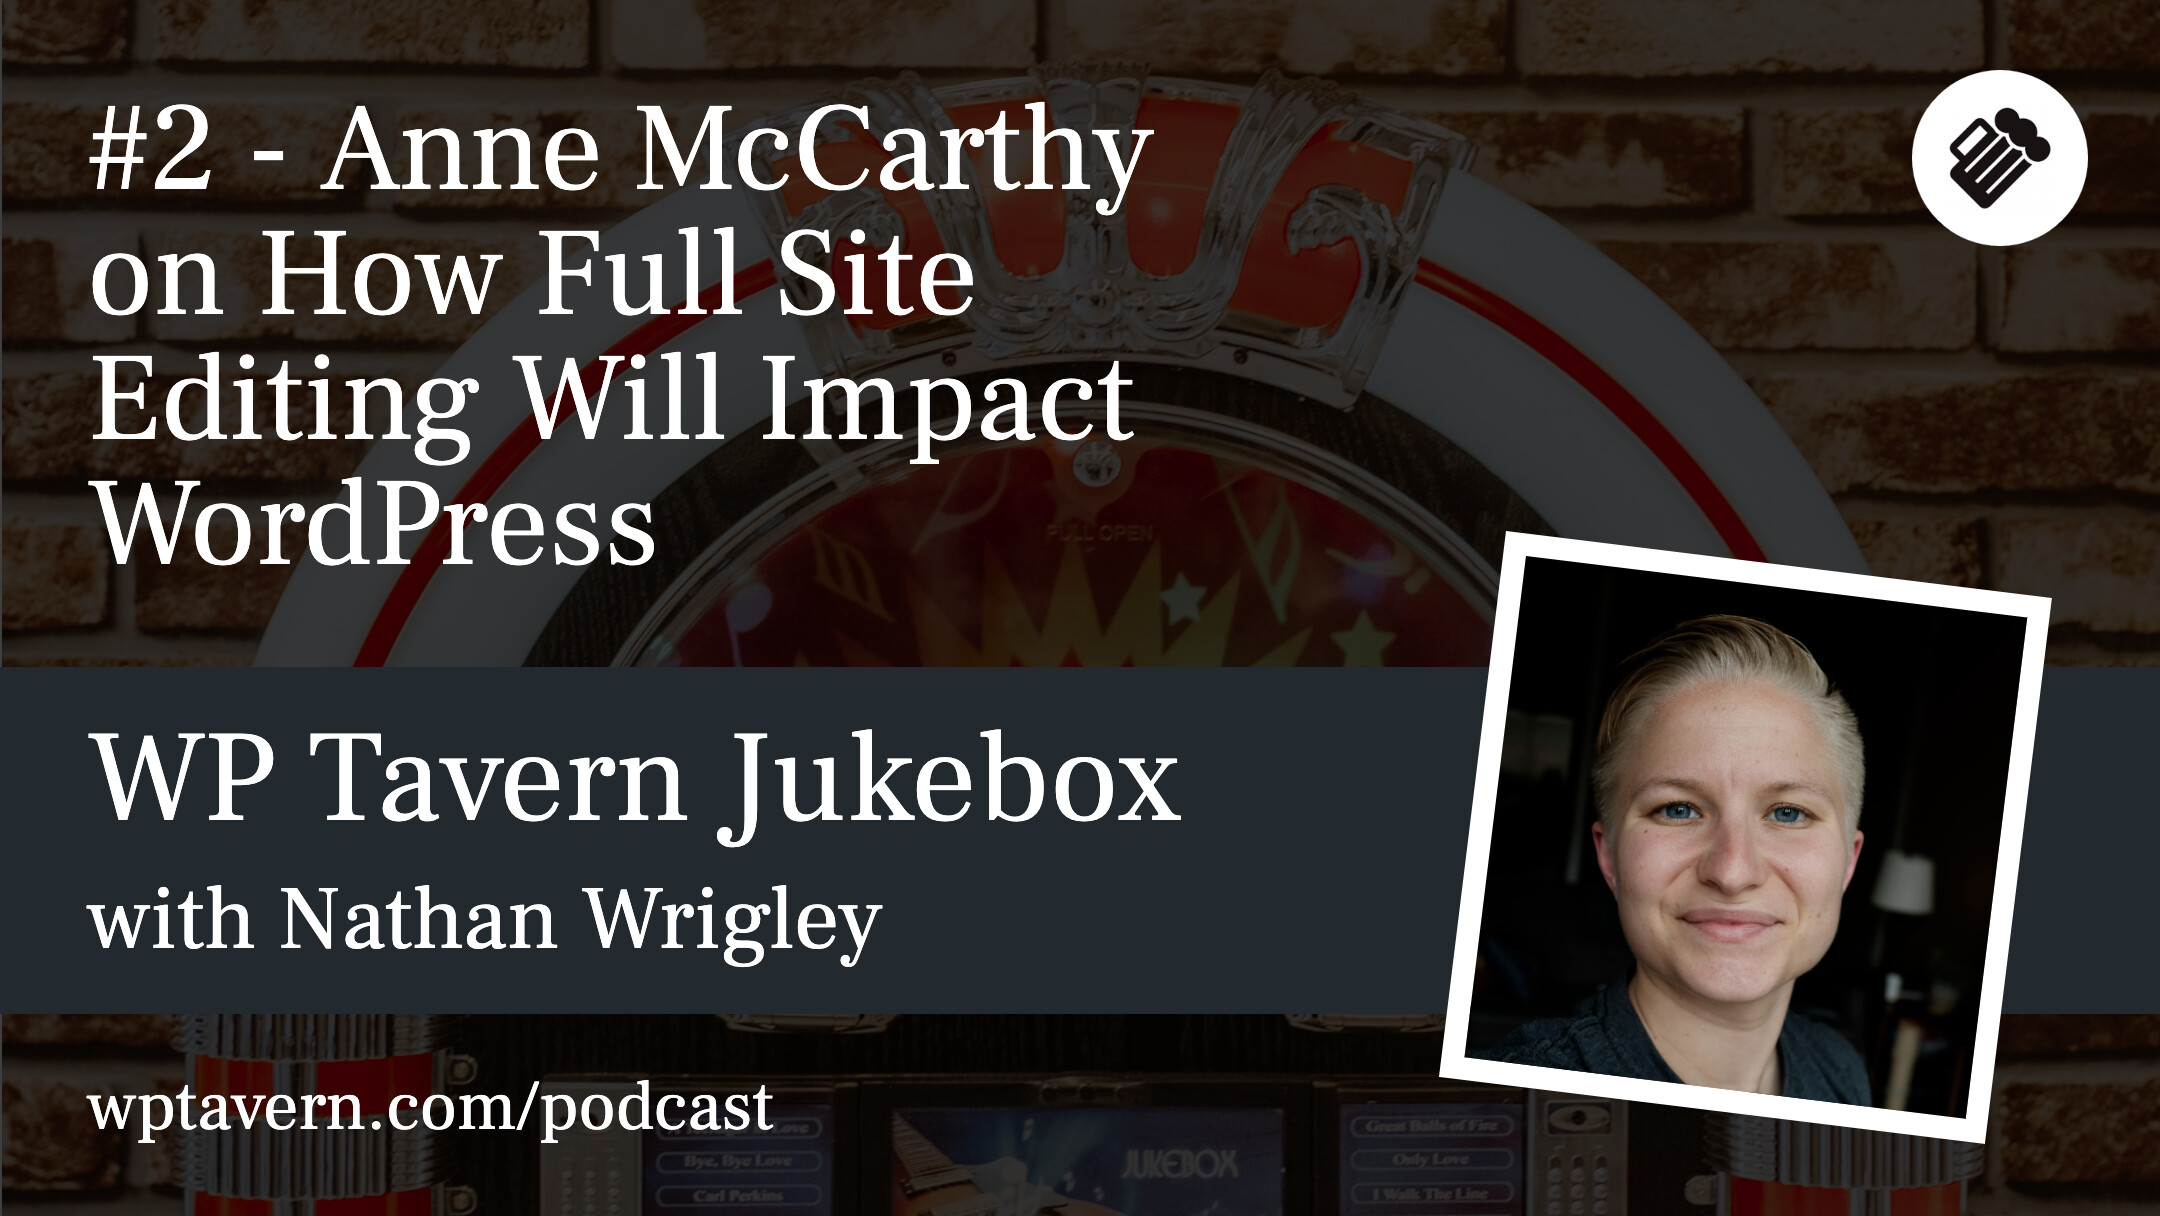 #2 - Anne McCarthy on how Full Site Editing will Impact WordPress